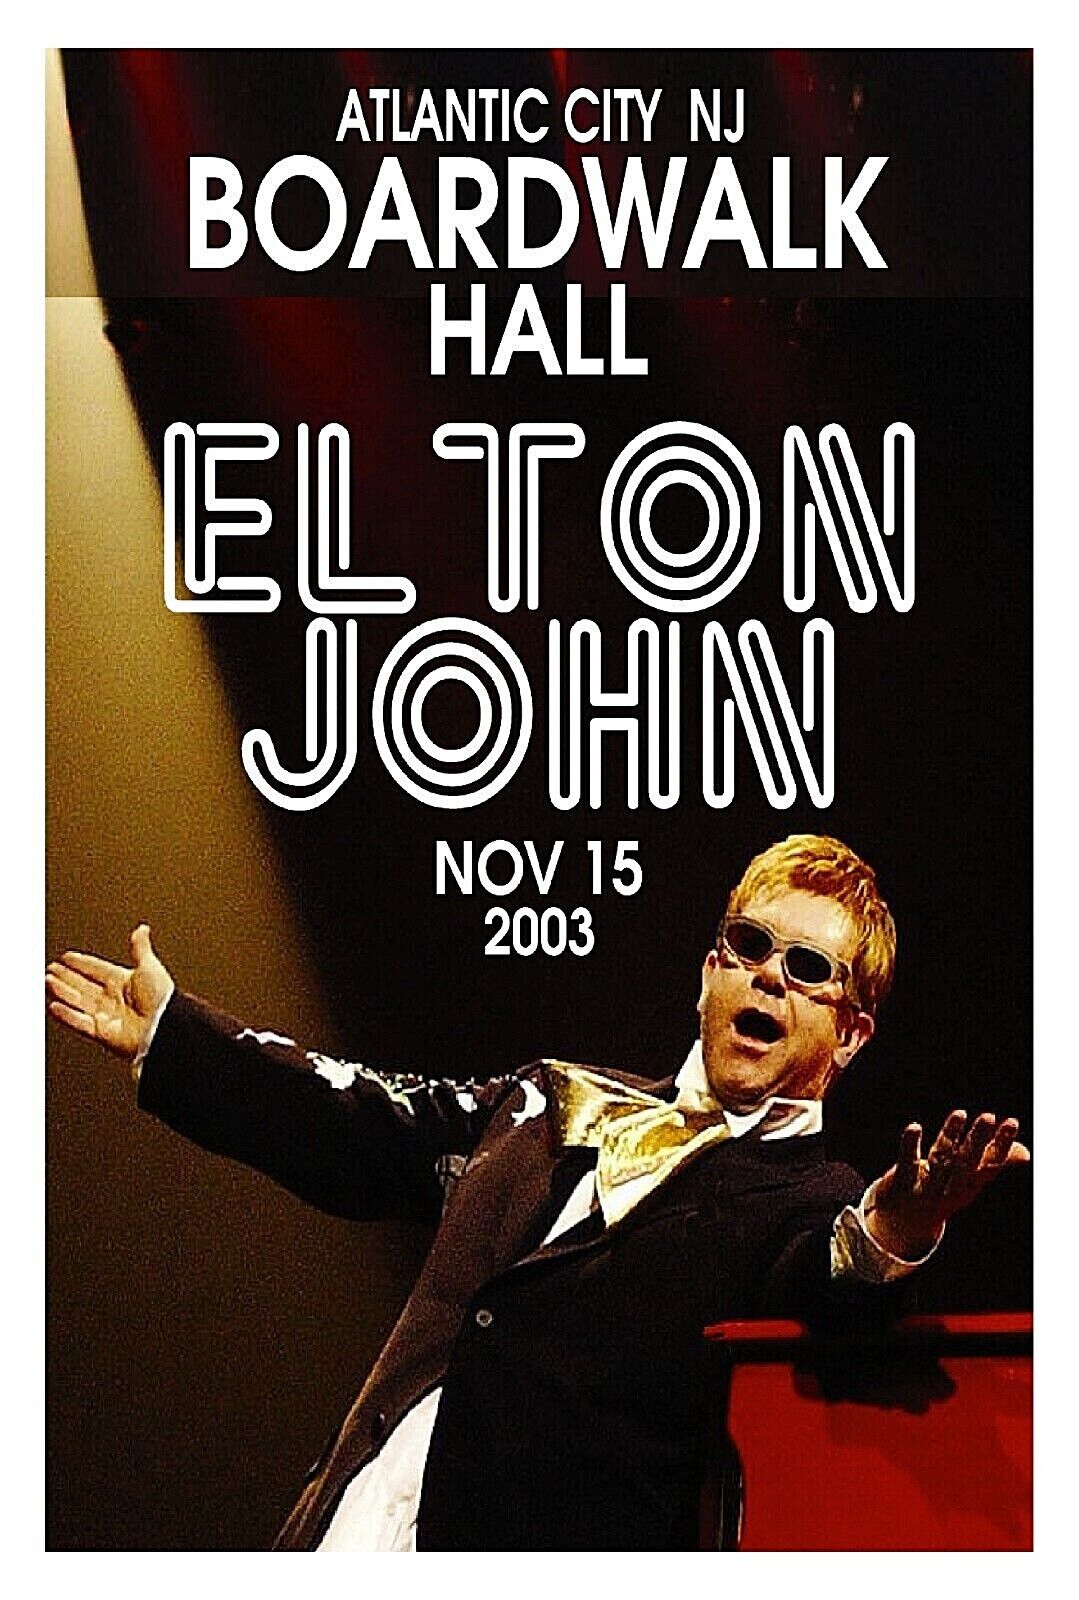 Elton John  2003 Concert Poster Boardwalk Hall Atlantic City Nj Gig Poster Sign